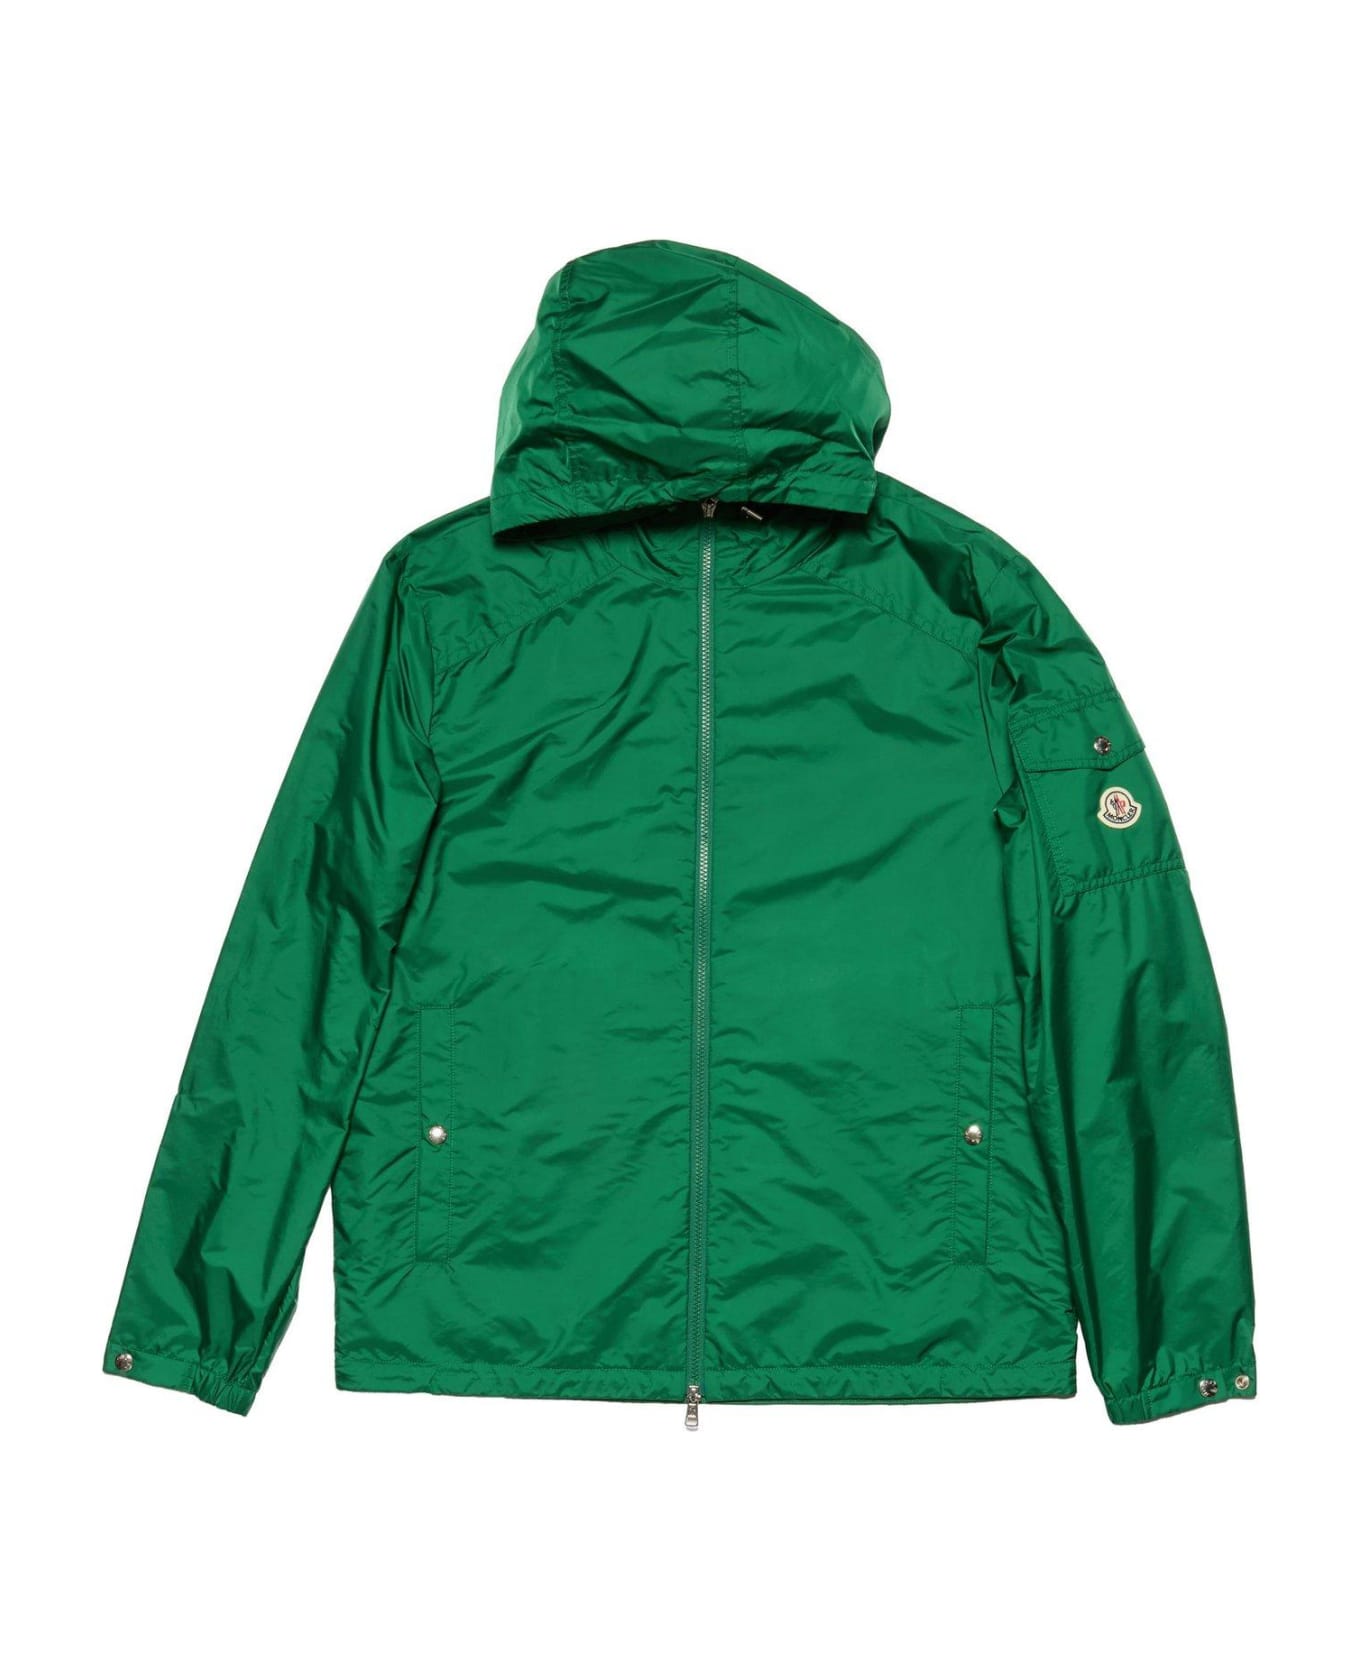 Moncler Etiache Rain Jacket - Green ジャケット